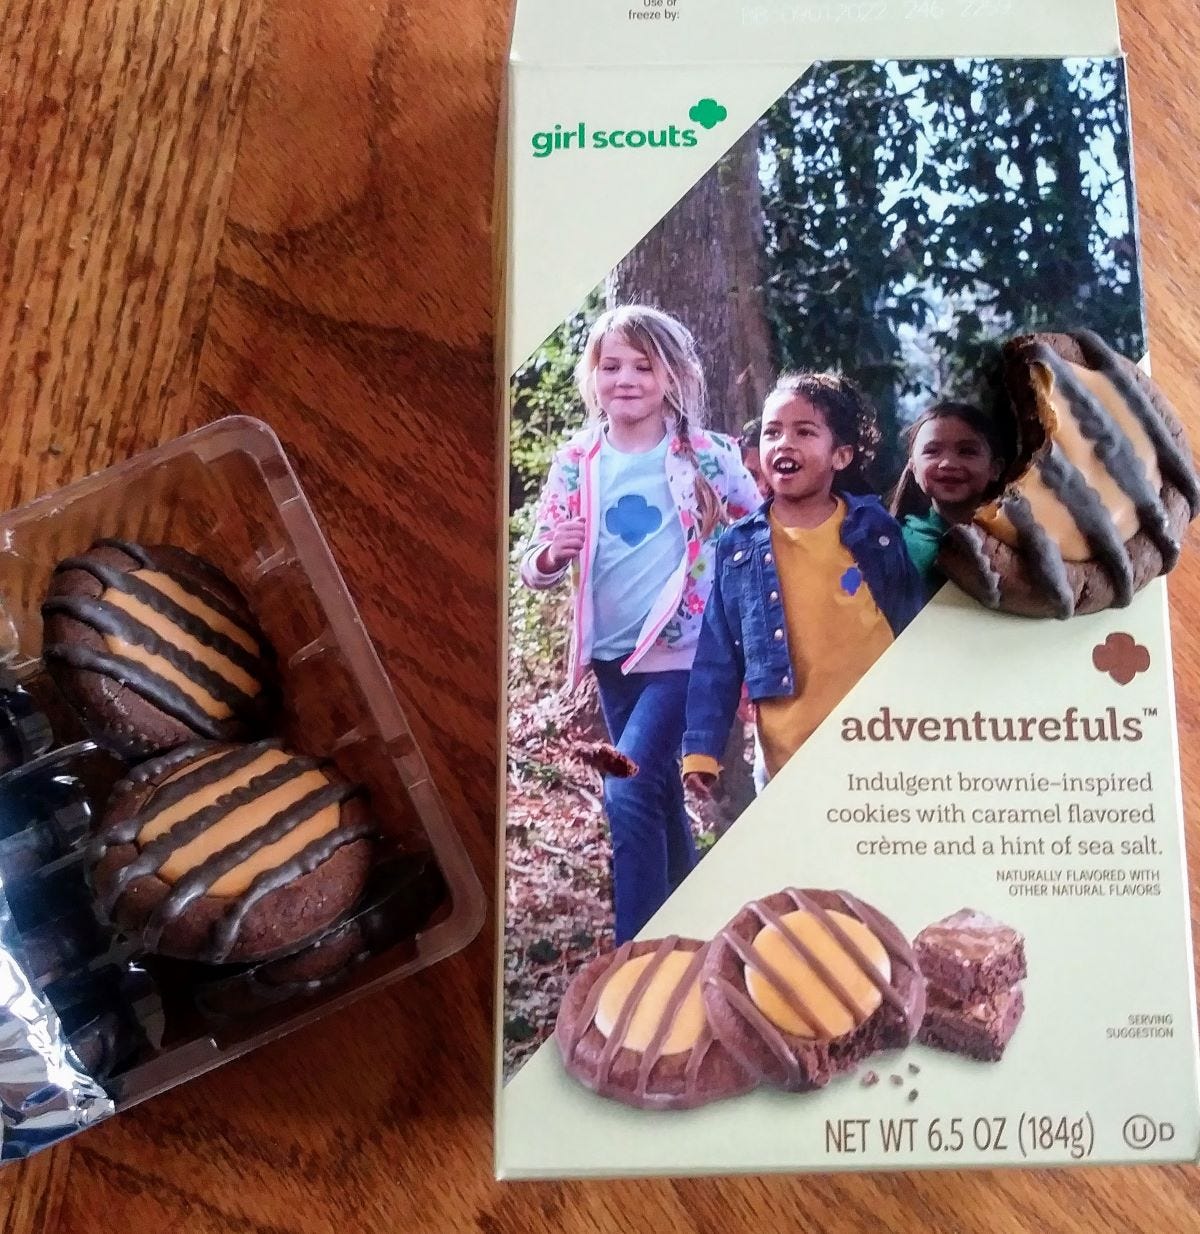 2 Adventurefuls cookies and box.